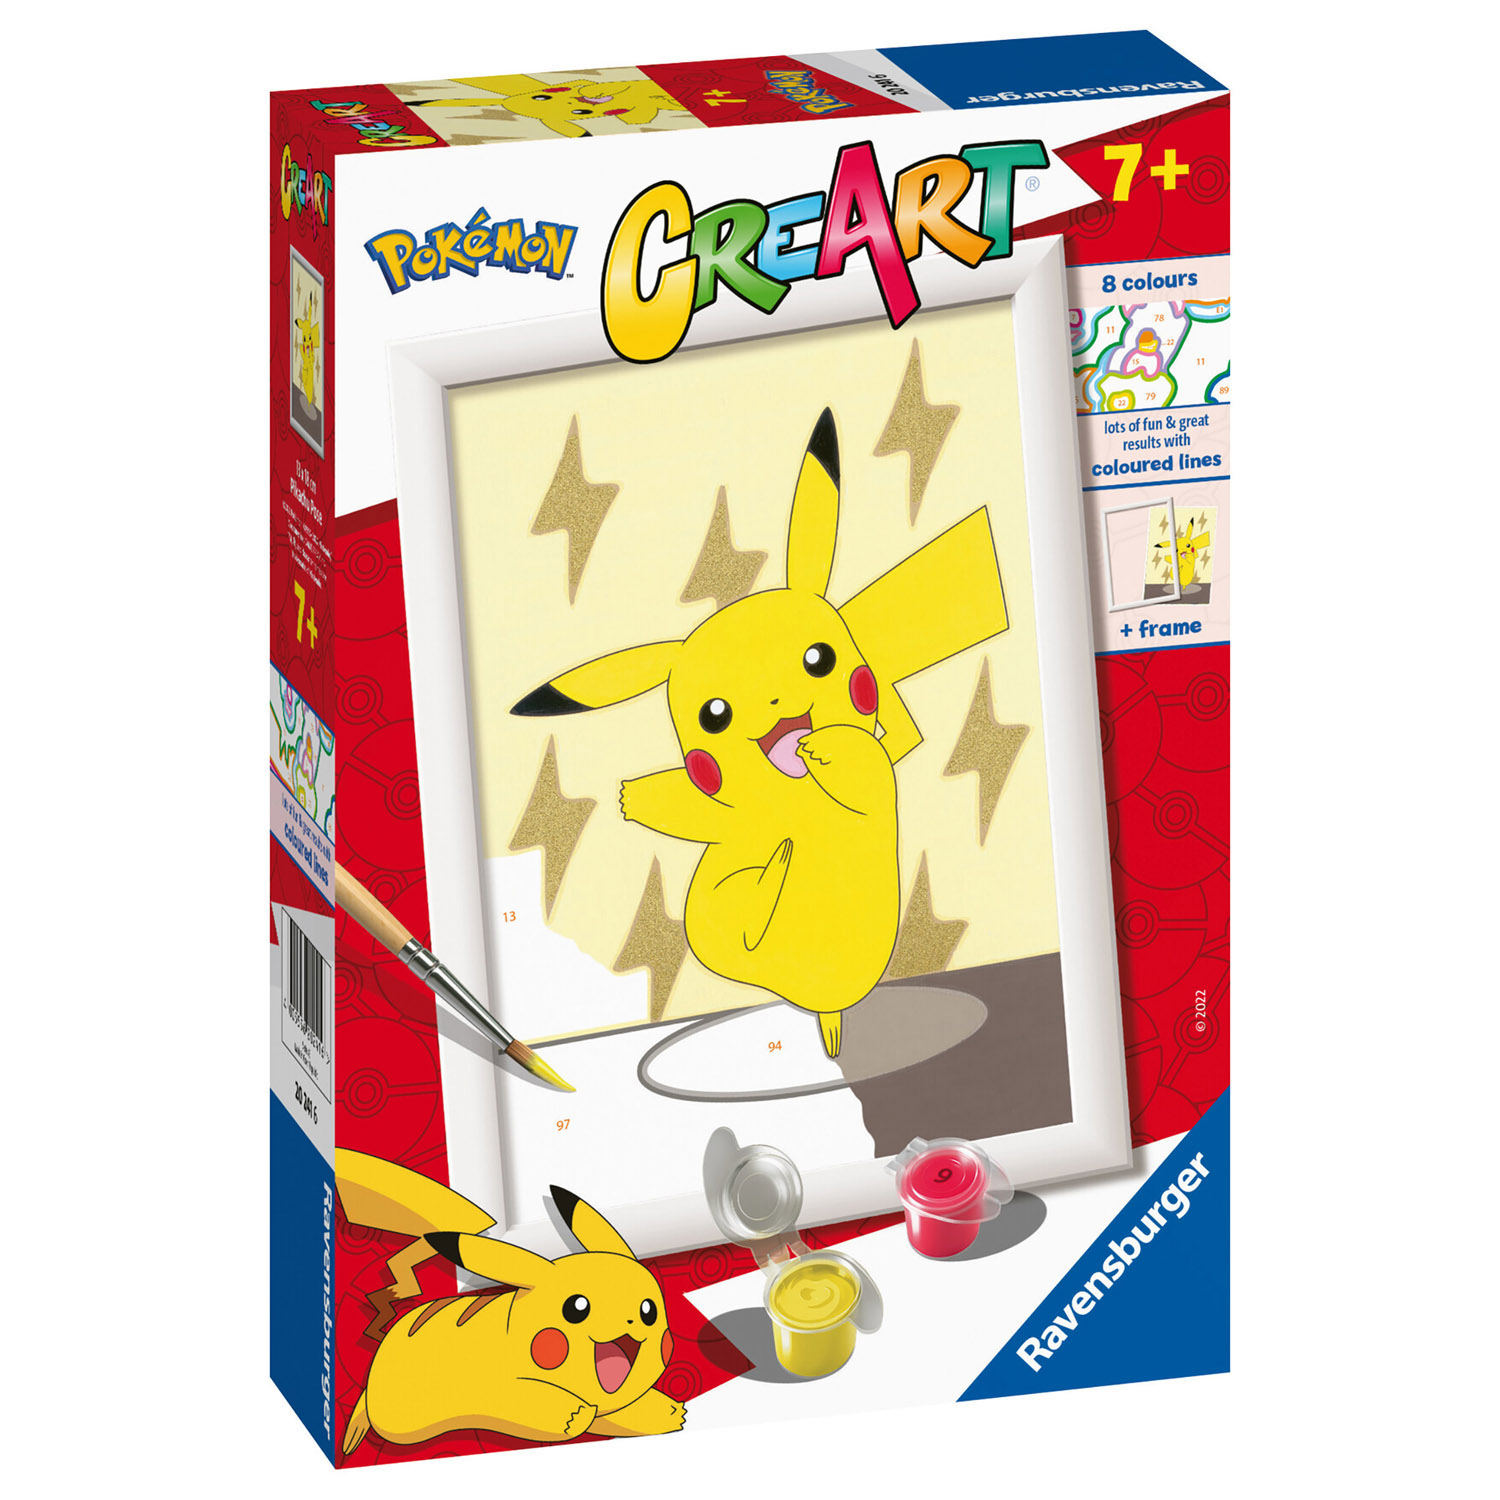 Creart Pokémon Pikachu, Kit per dipingere con i numeri in Vendita Online